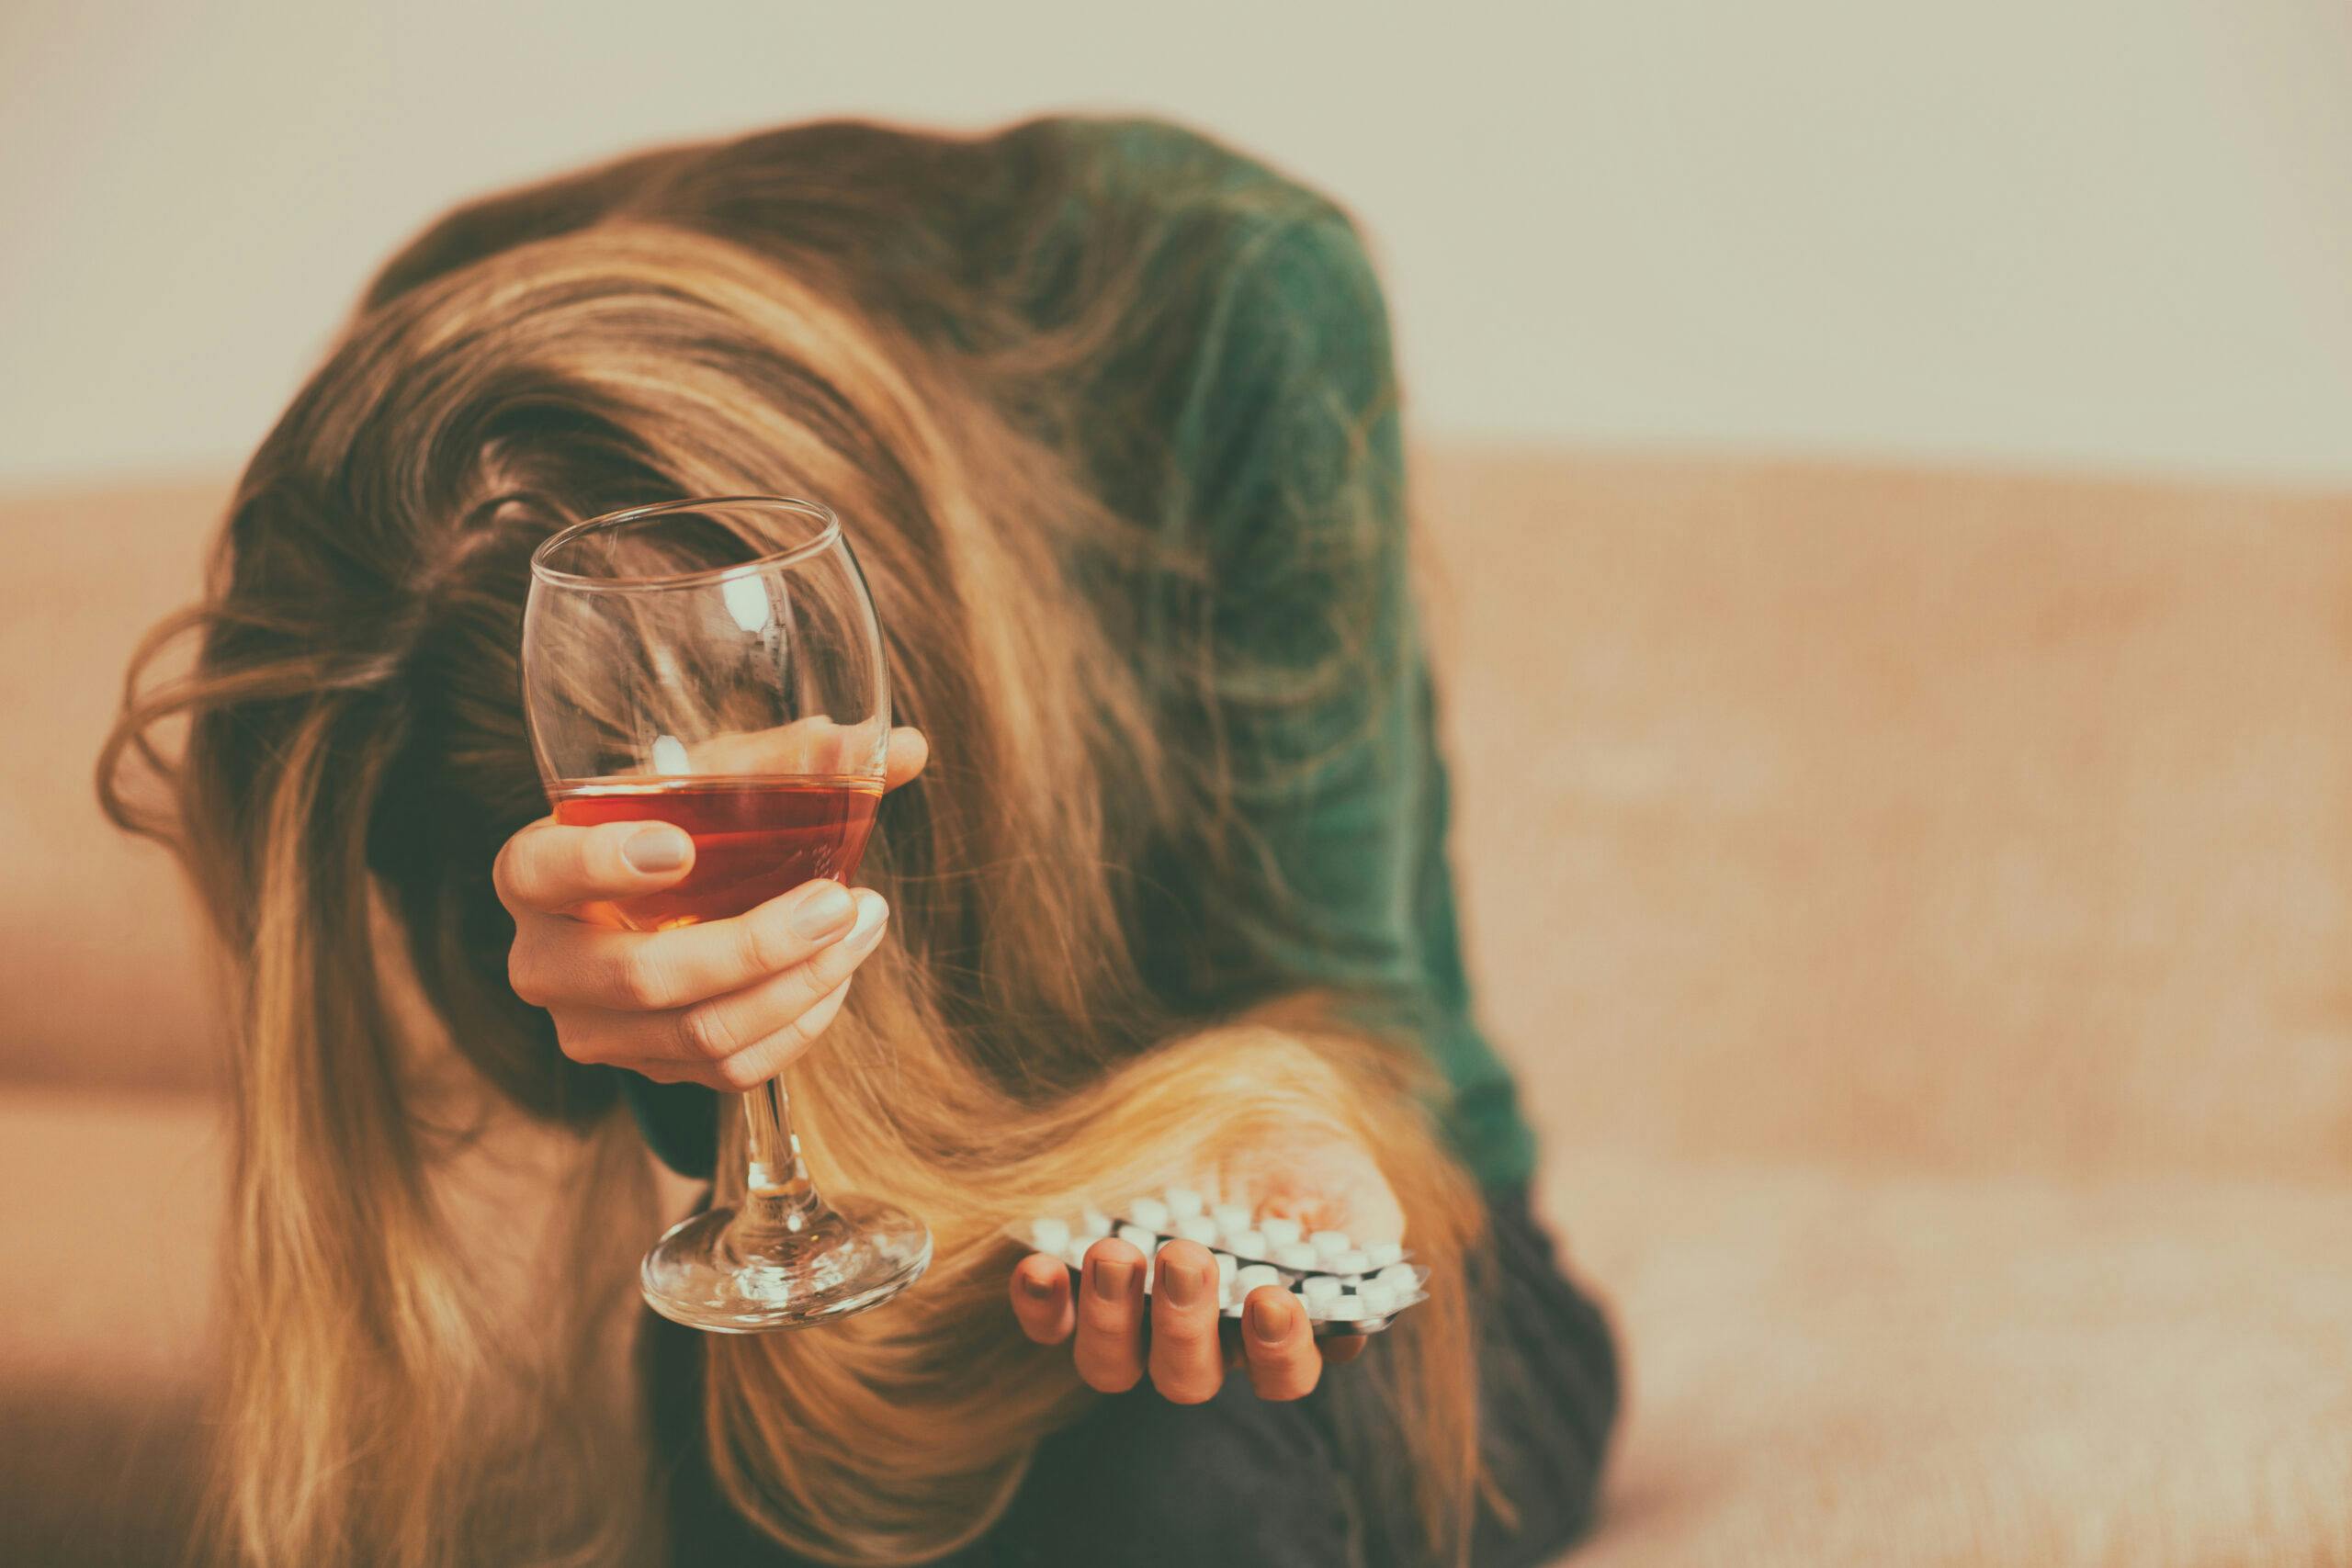 depressed woman sick drinking wine taking pills phenibut